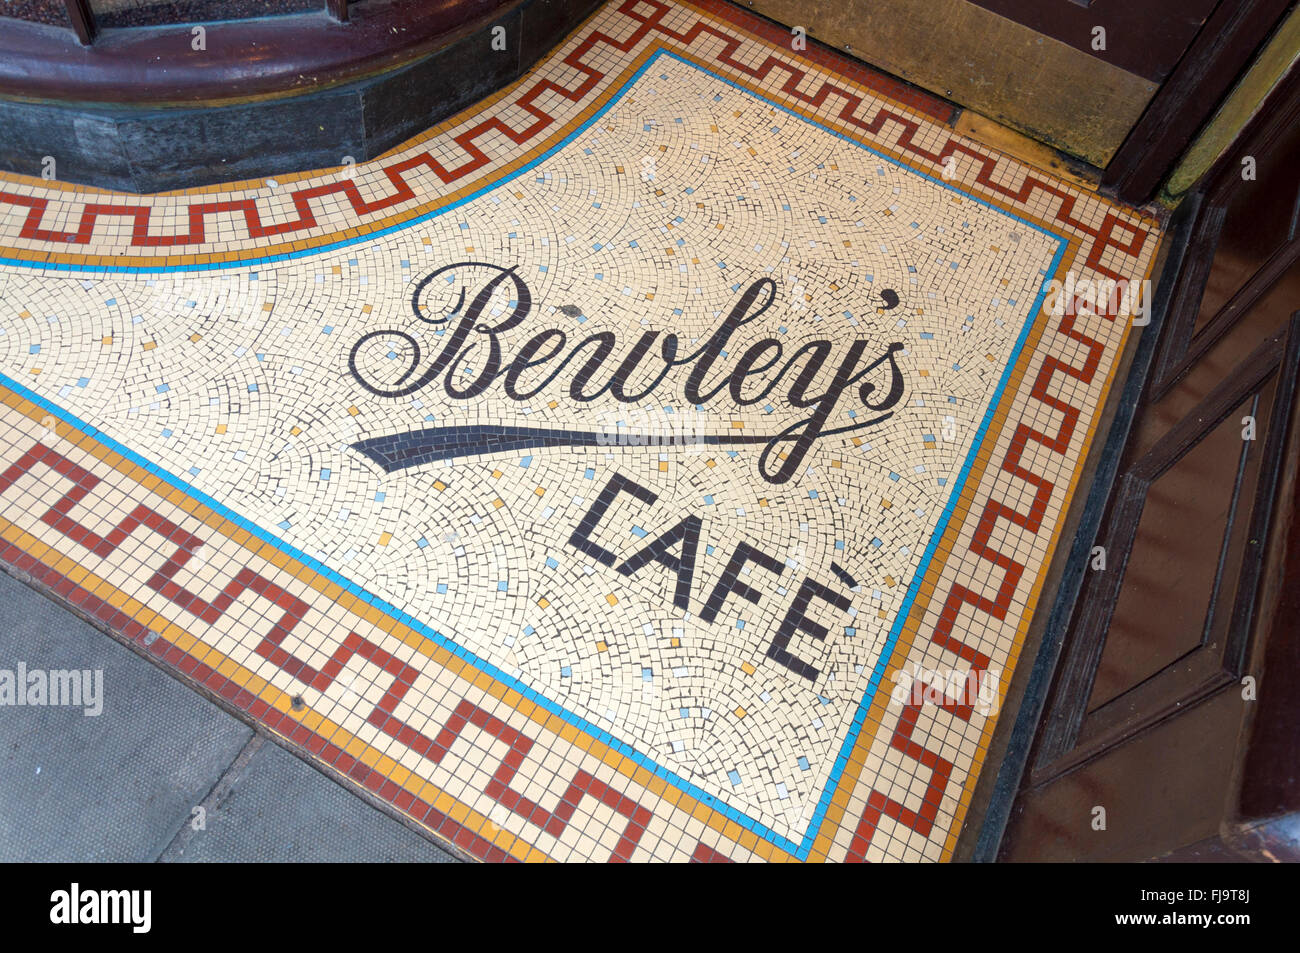 Bewley's Cafe famous coffee shop entrance detail, Dublin, Ireland Stock Photo